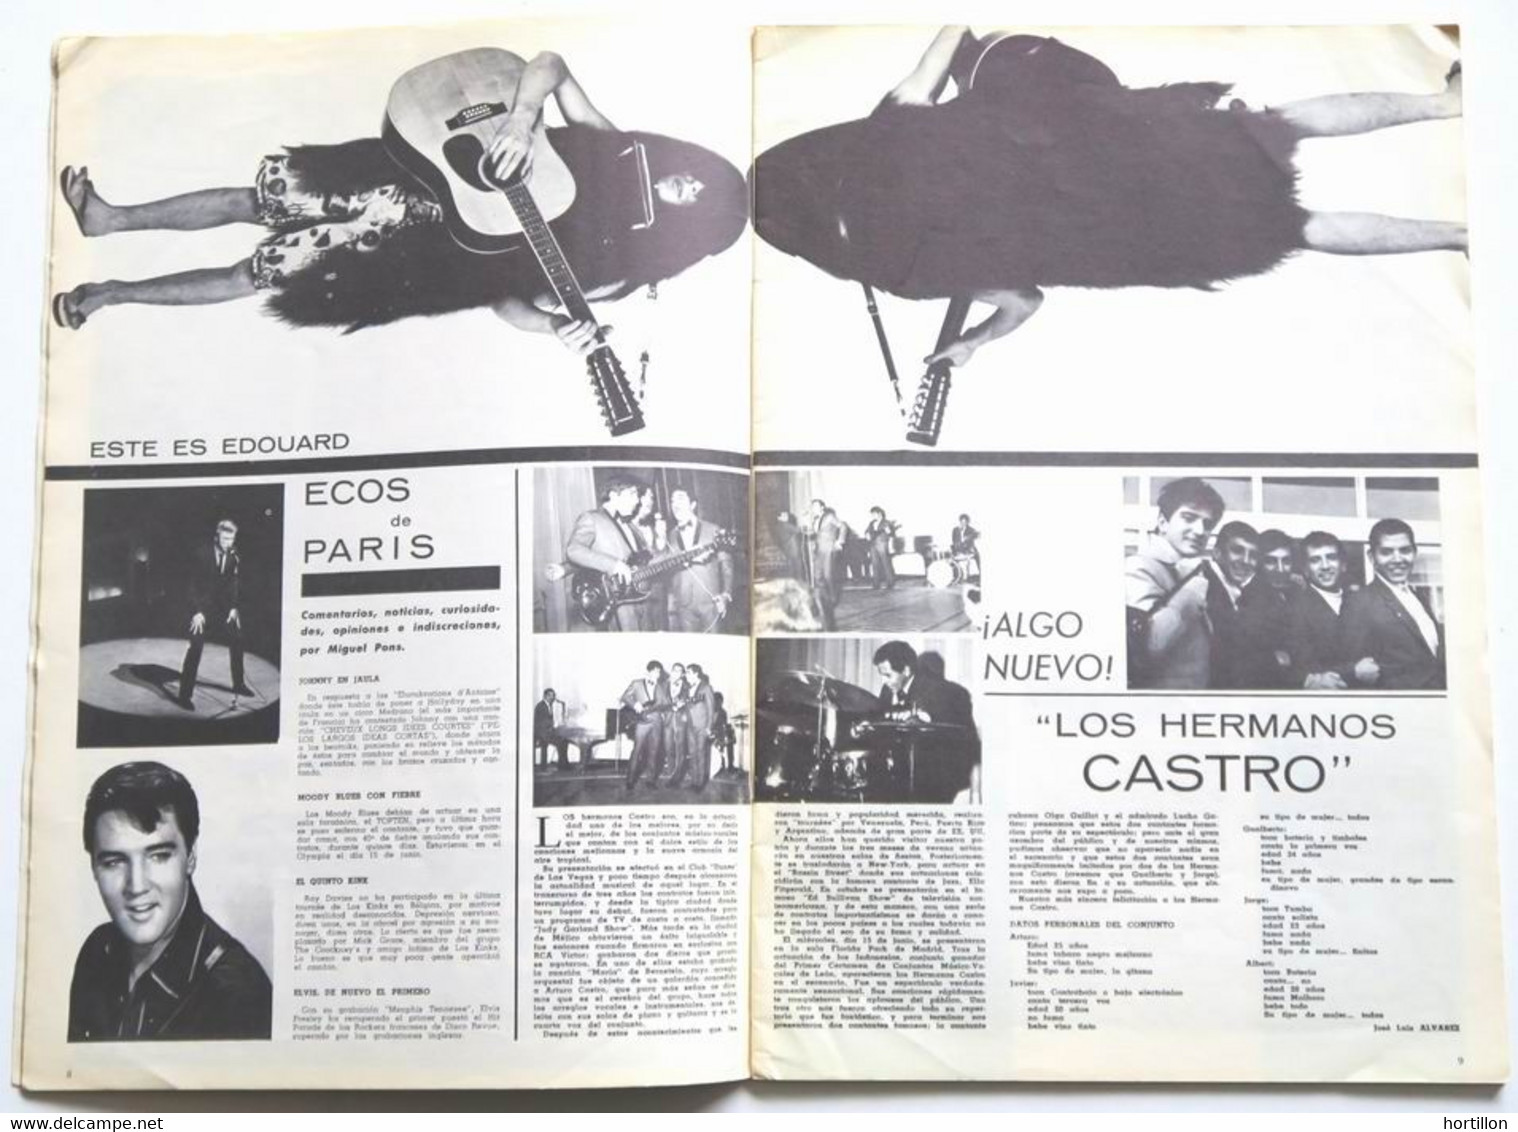 Revue Espagne FONORAMA N° 30 Juillet 1966 ROLLING STONES / PRETTY THINKS / KINKS / PATRICIA CARLI - [4] Temas